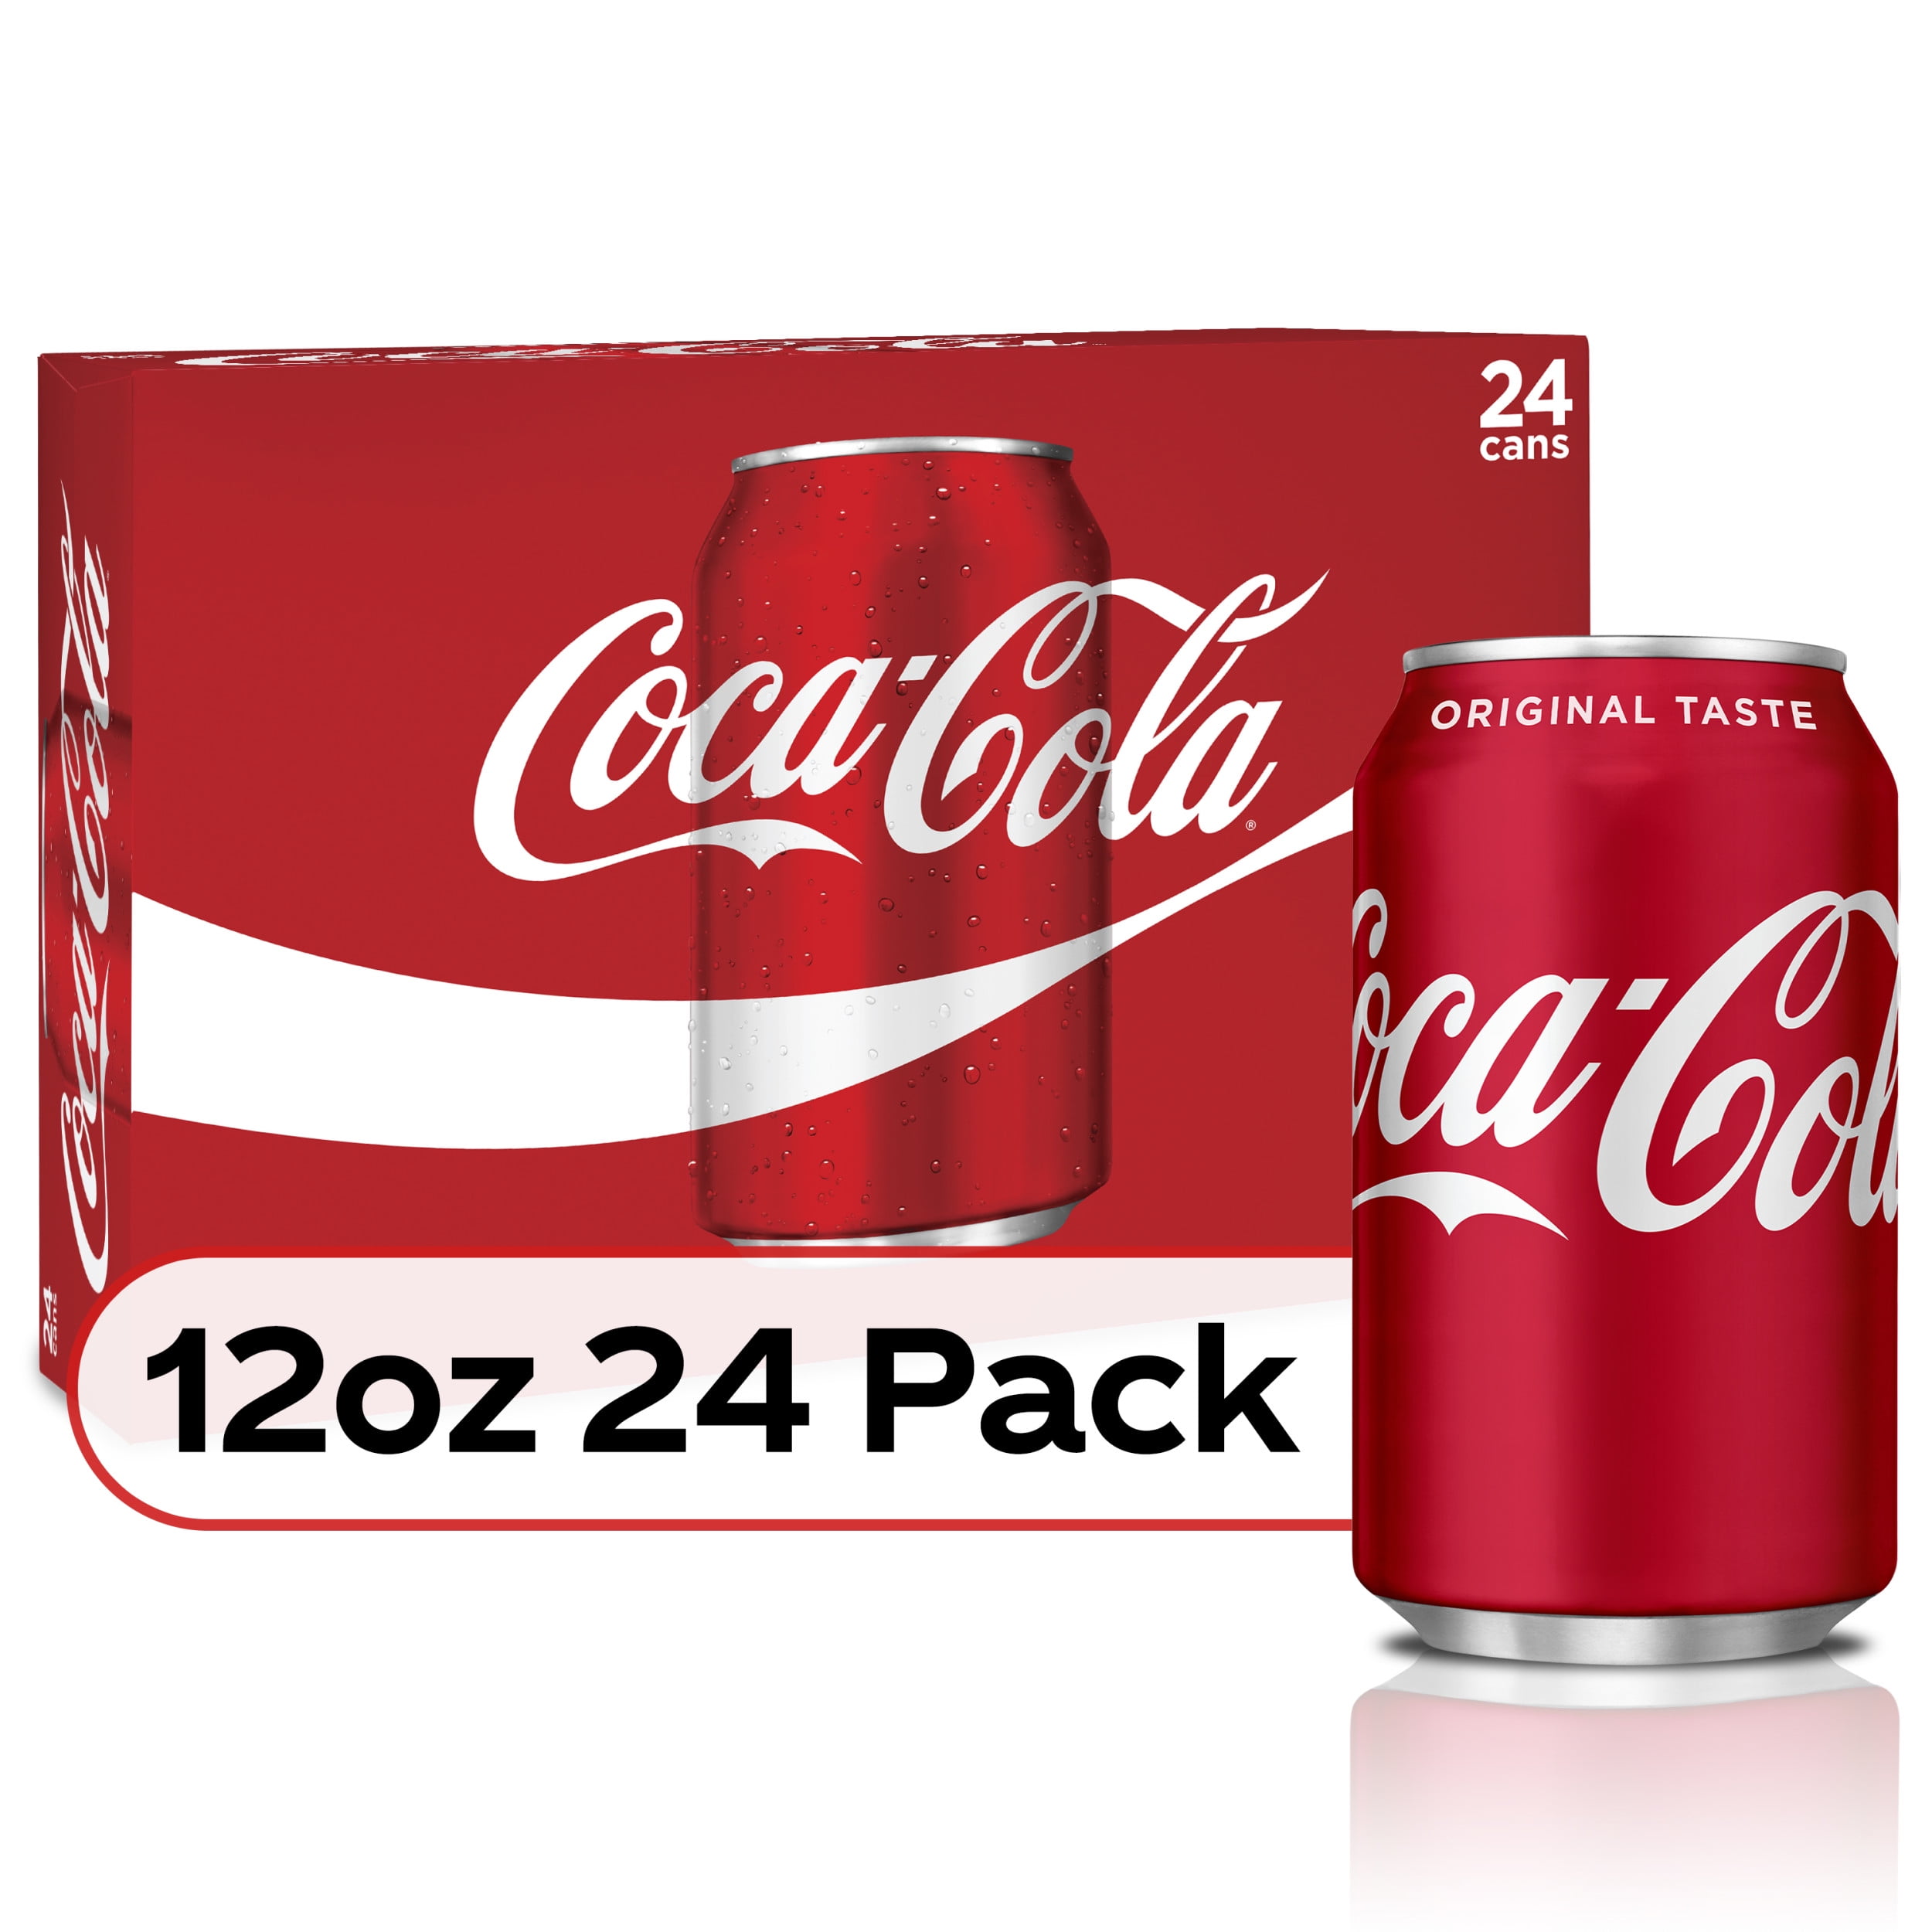 Zeeziekte Expliciet zacht Coca-Cola Soda Soft Drink, 12 fl oz, 24 Pack - Walmart.com - Walmart.com